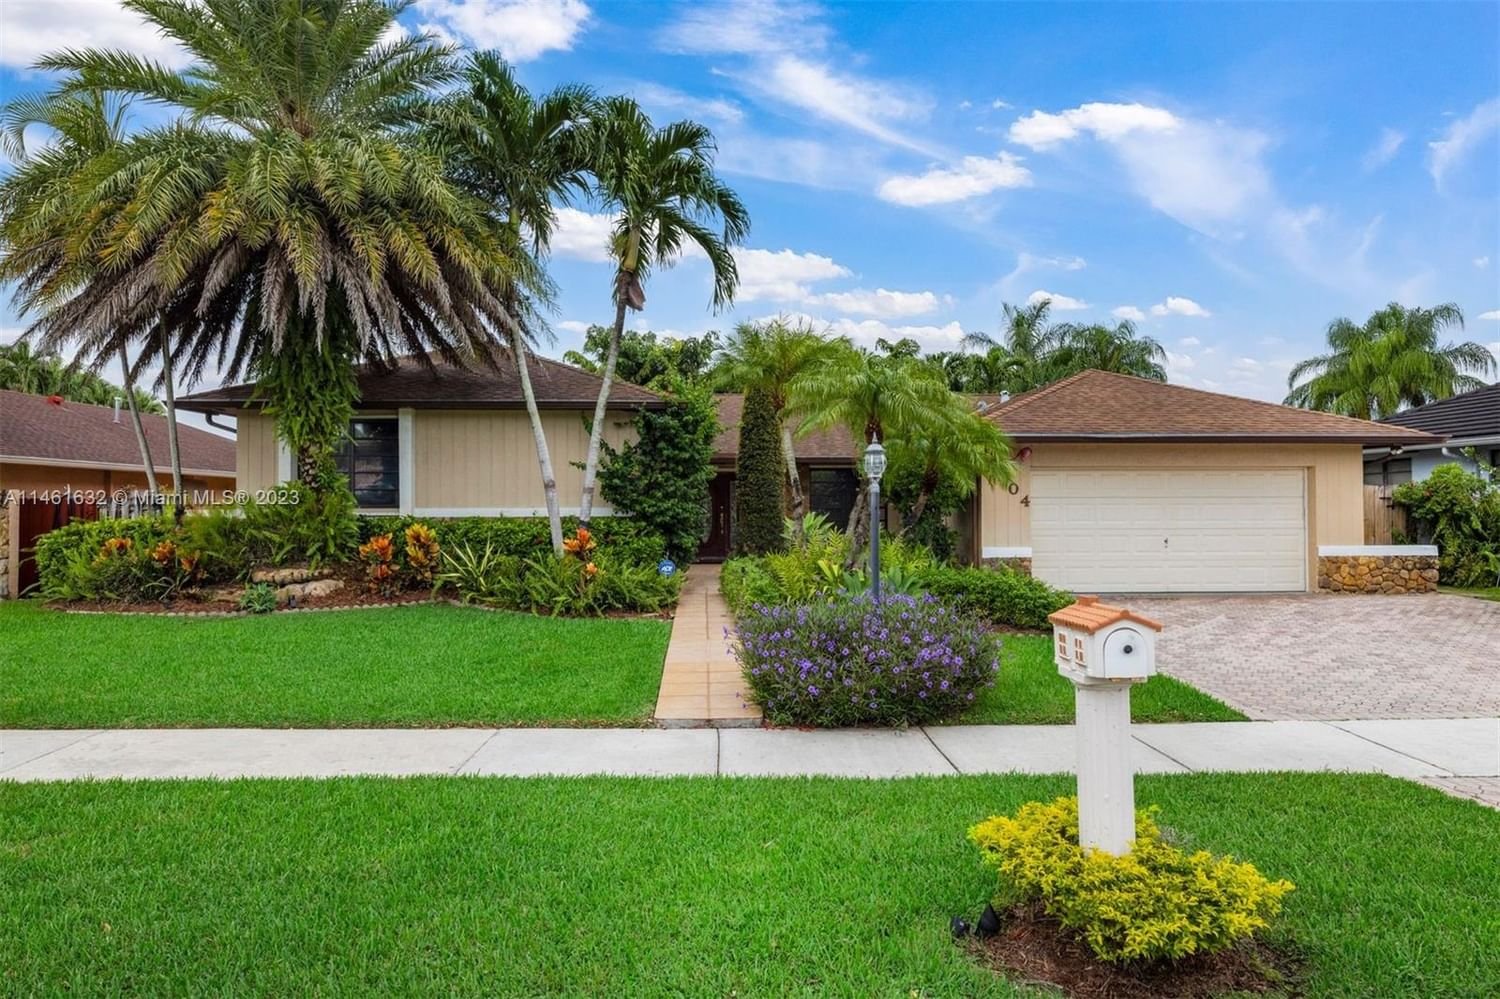 Real estate property located at 9604 117th Ct, Miami-Dade County, Miami, FL